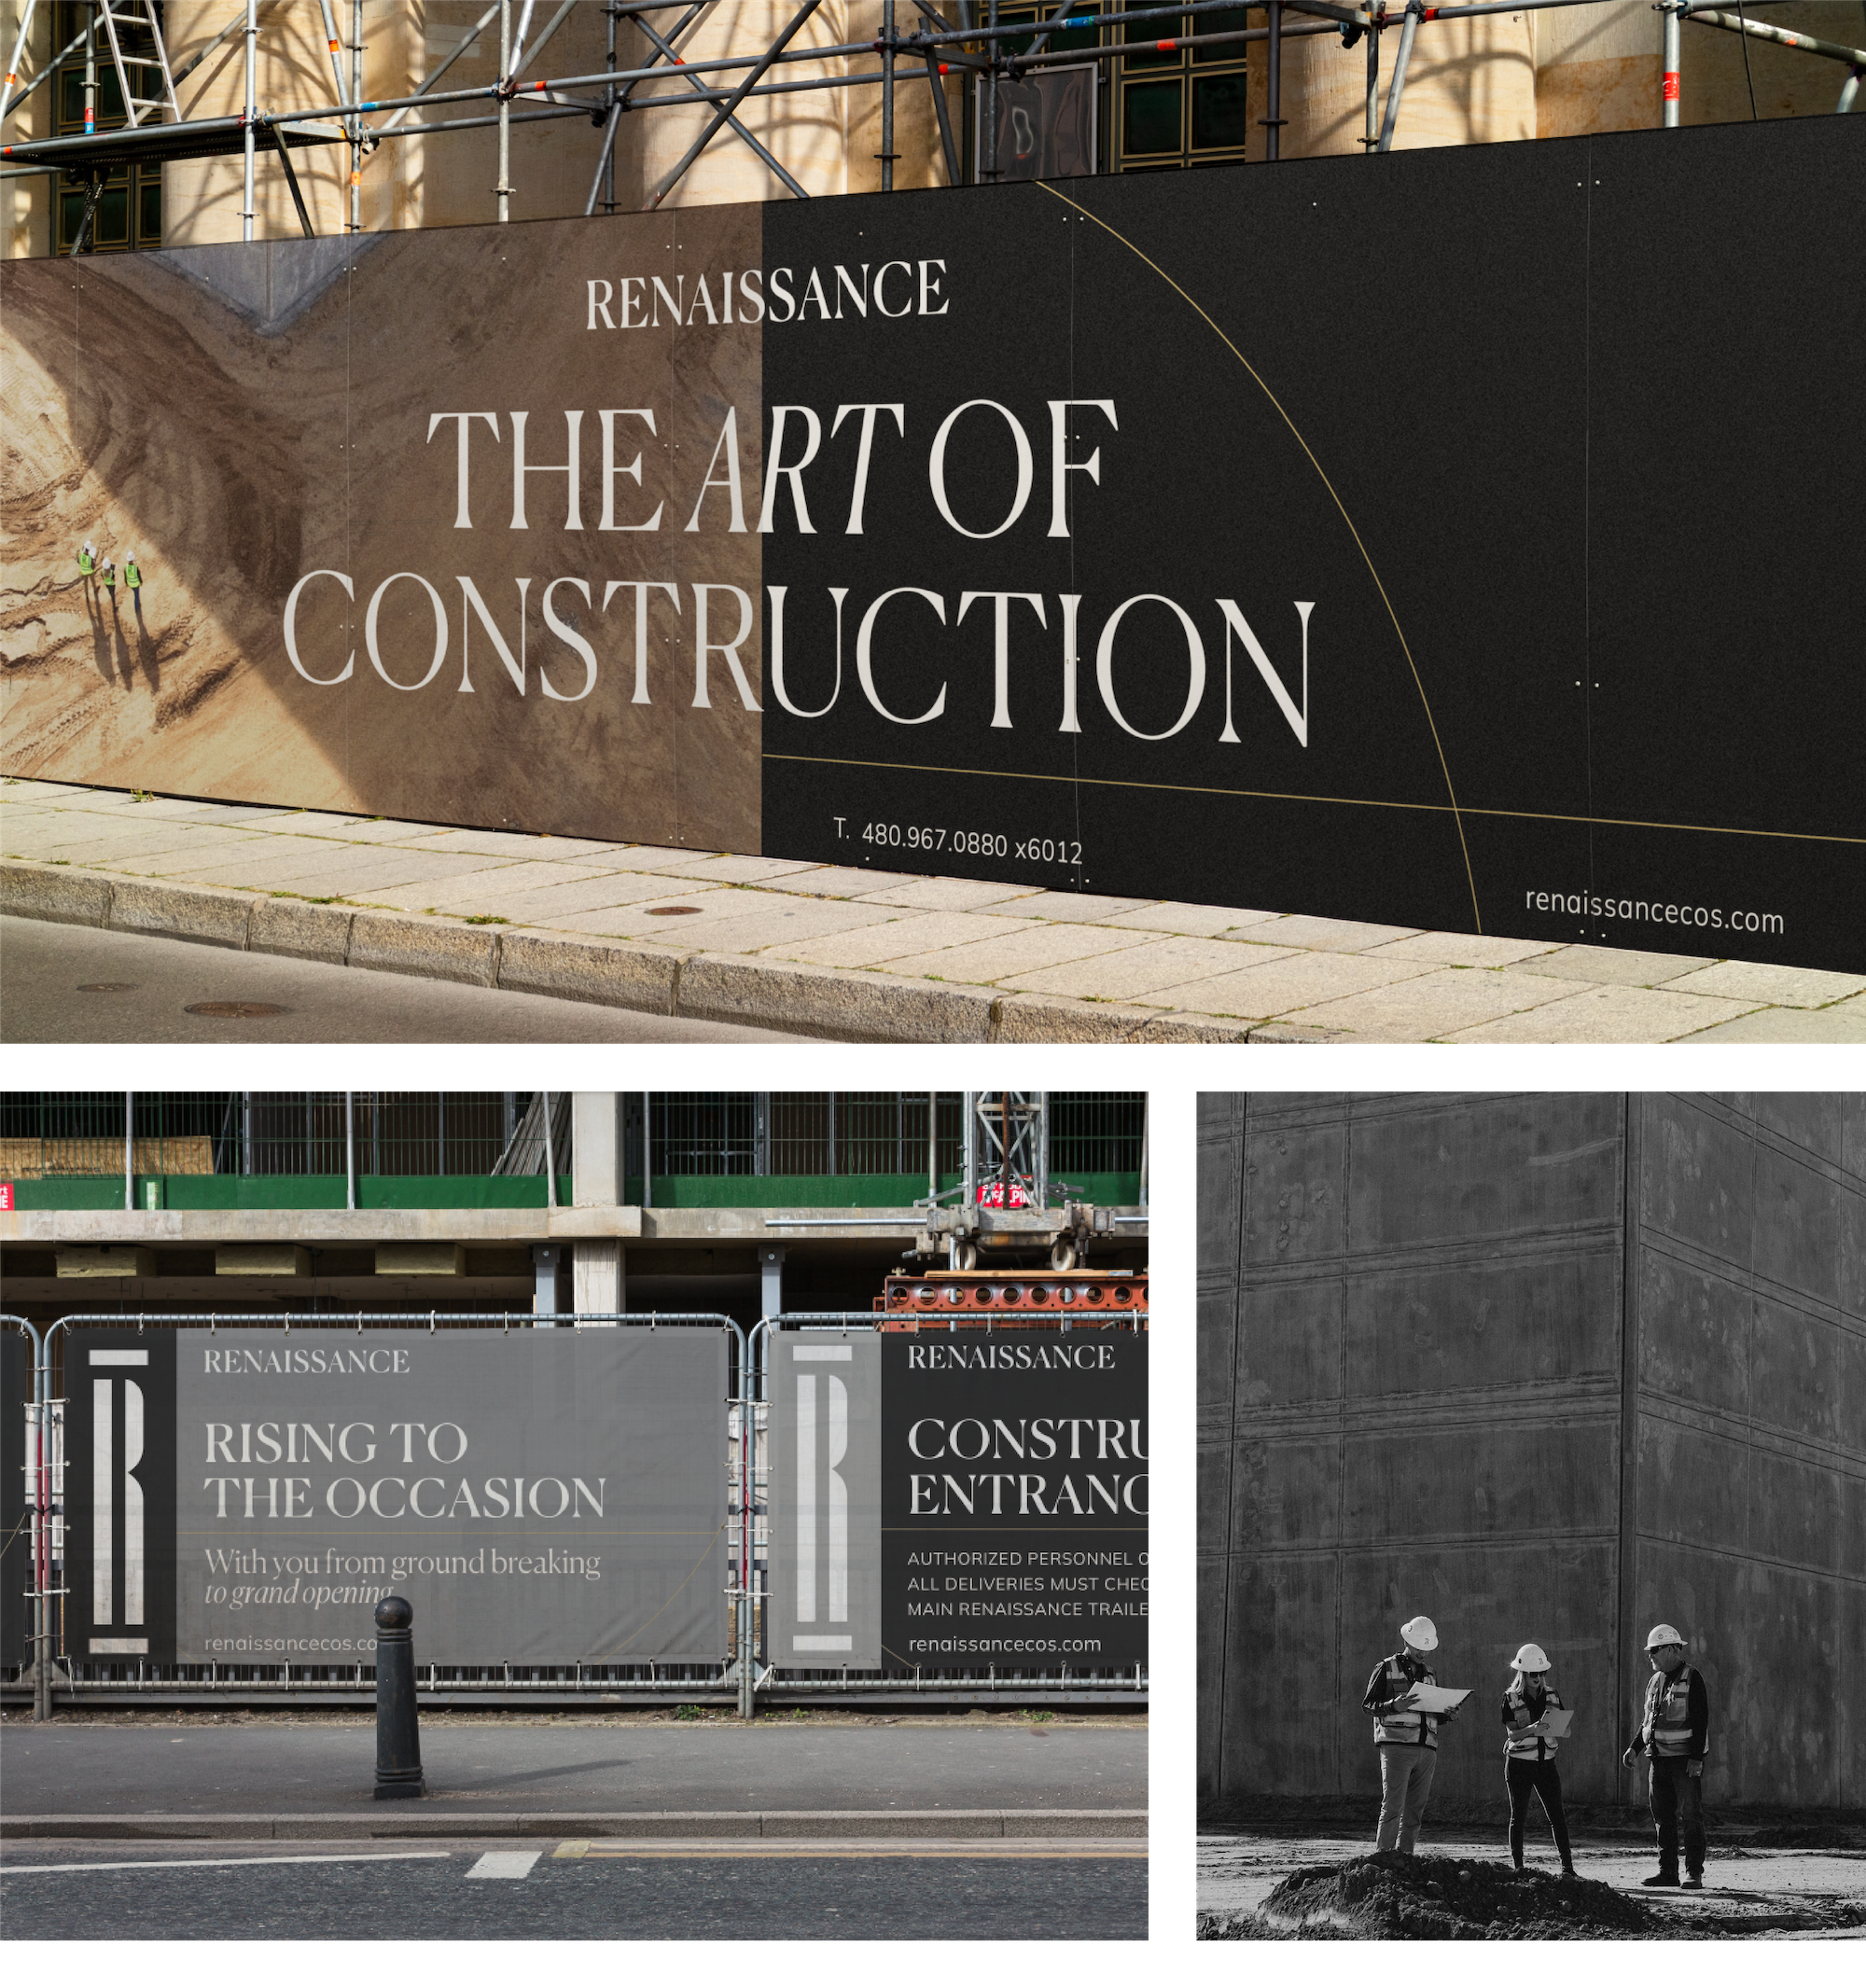 featured image four:The Art of Construction - Renaissance Rebrand